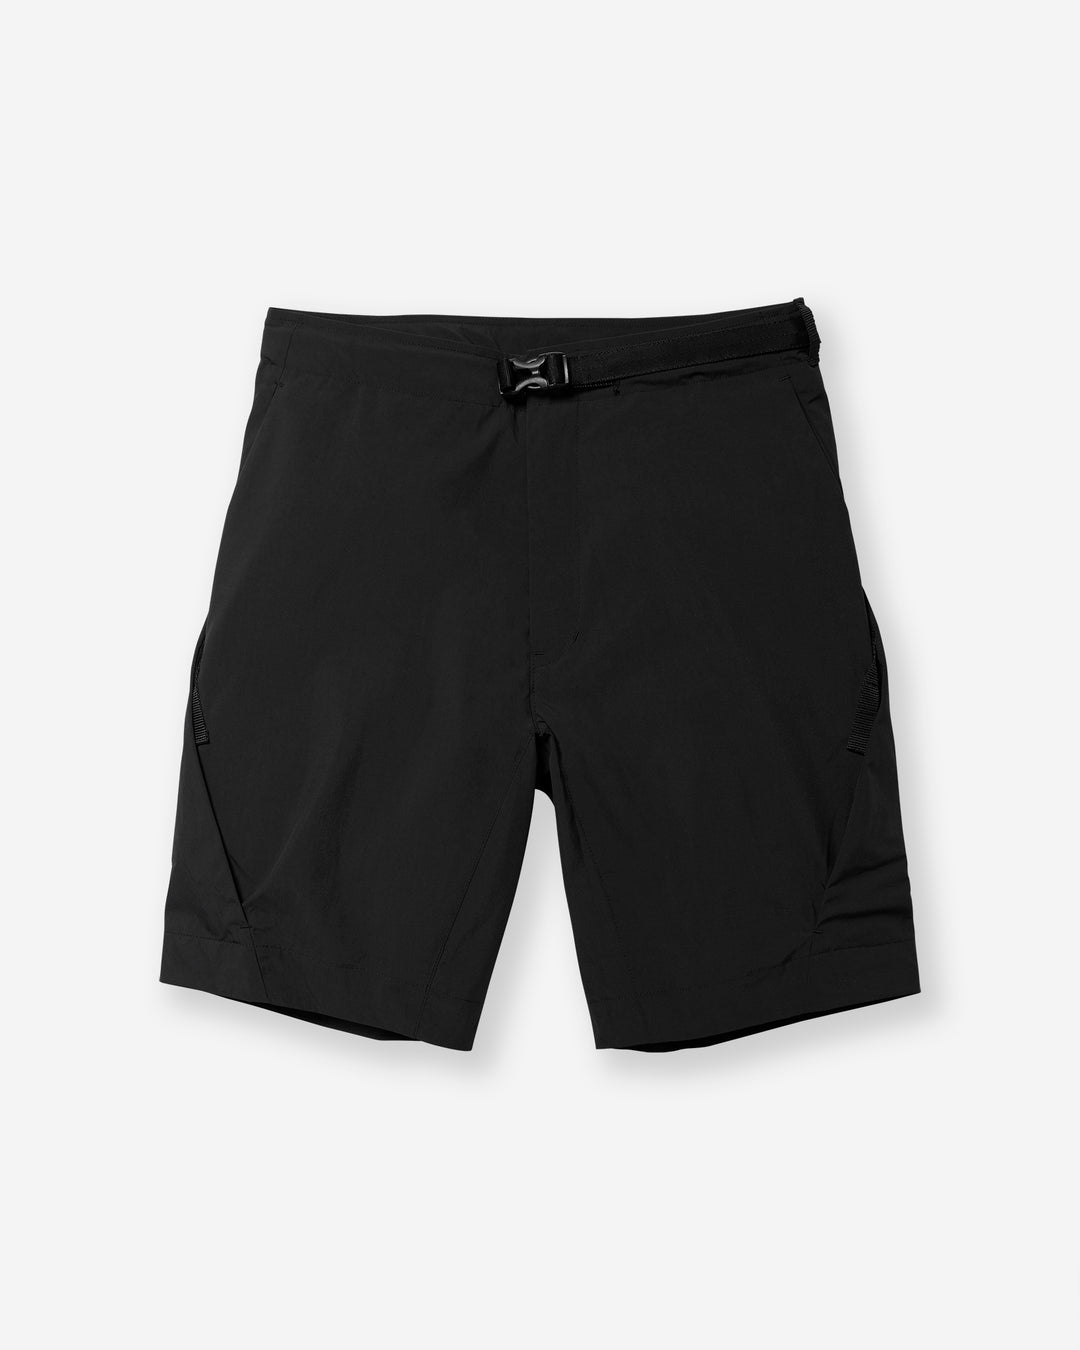 Y-Shorts (PS-LB02) - Black